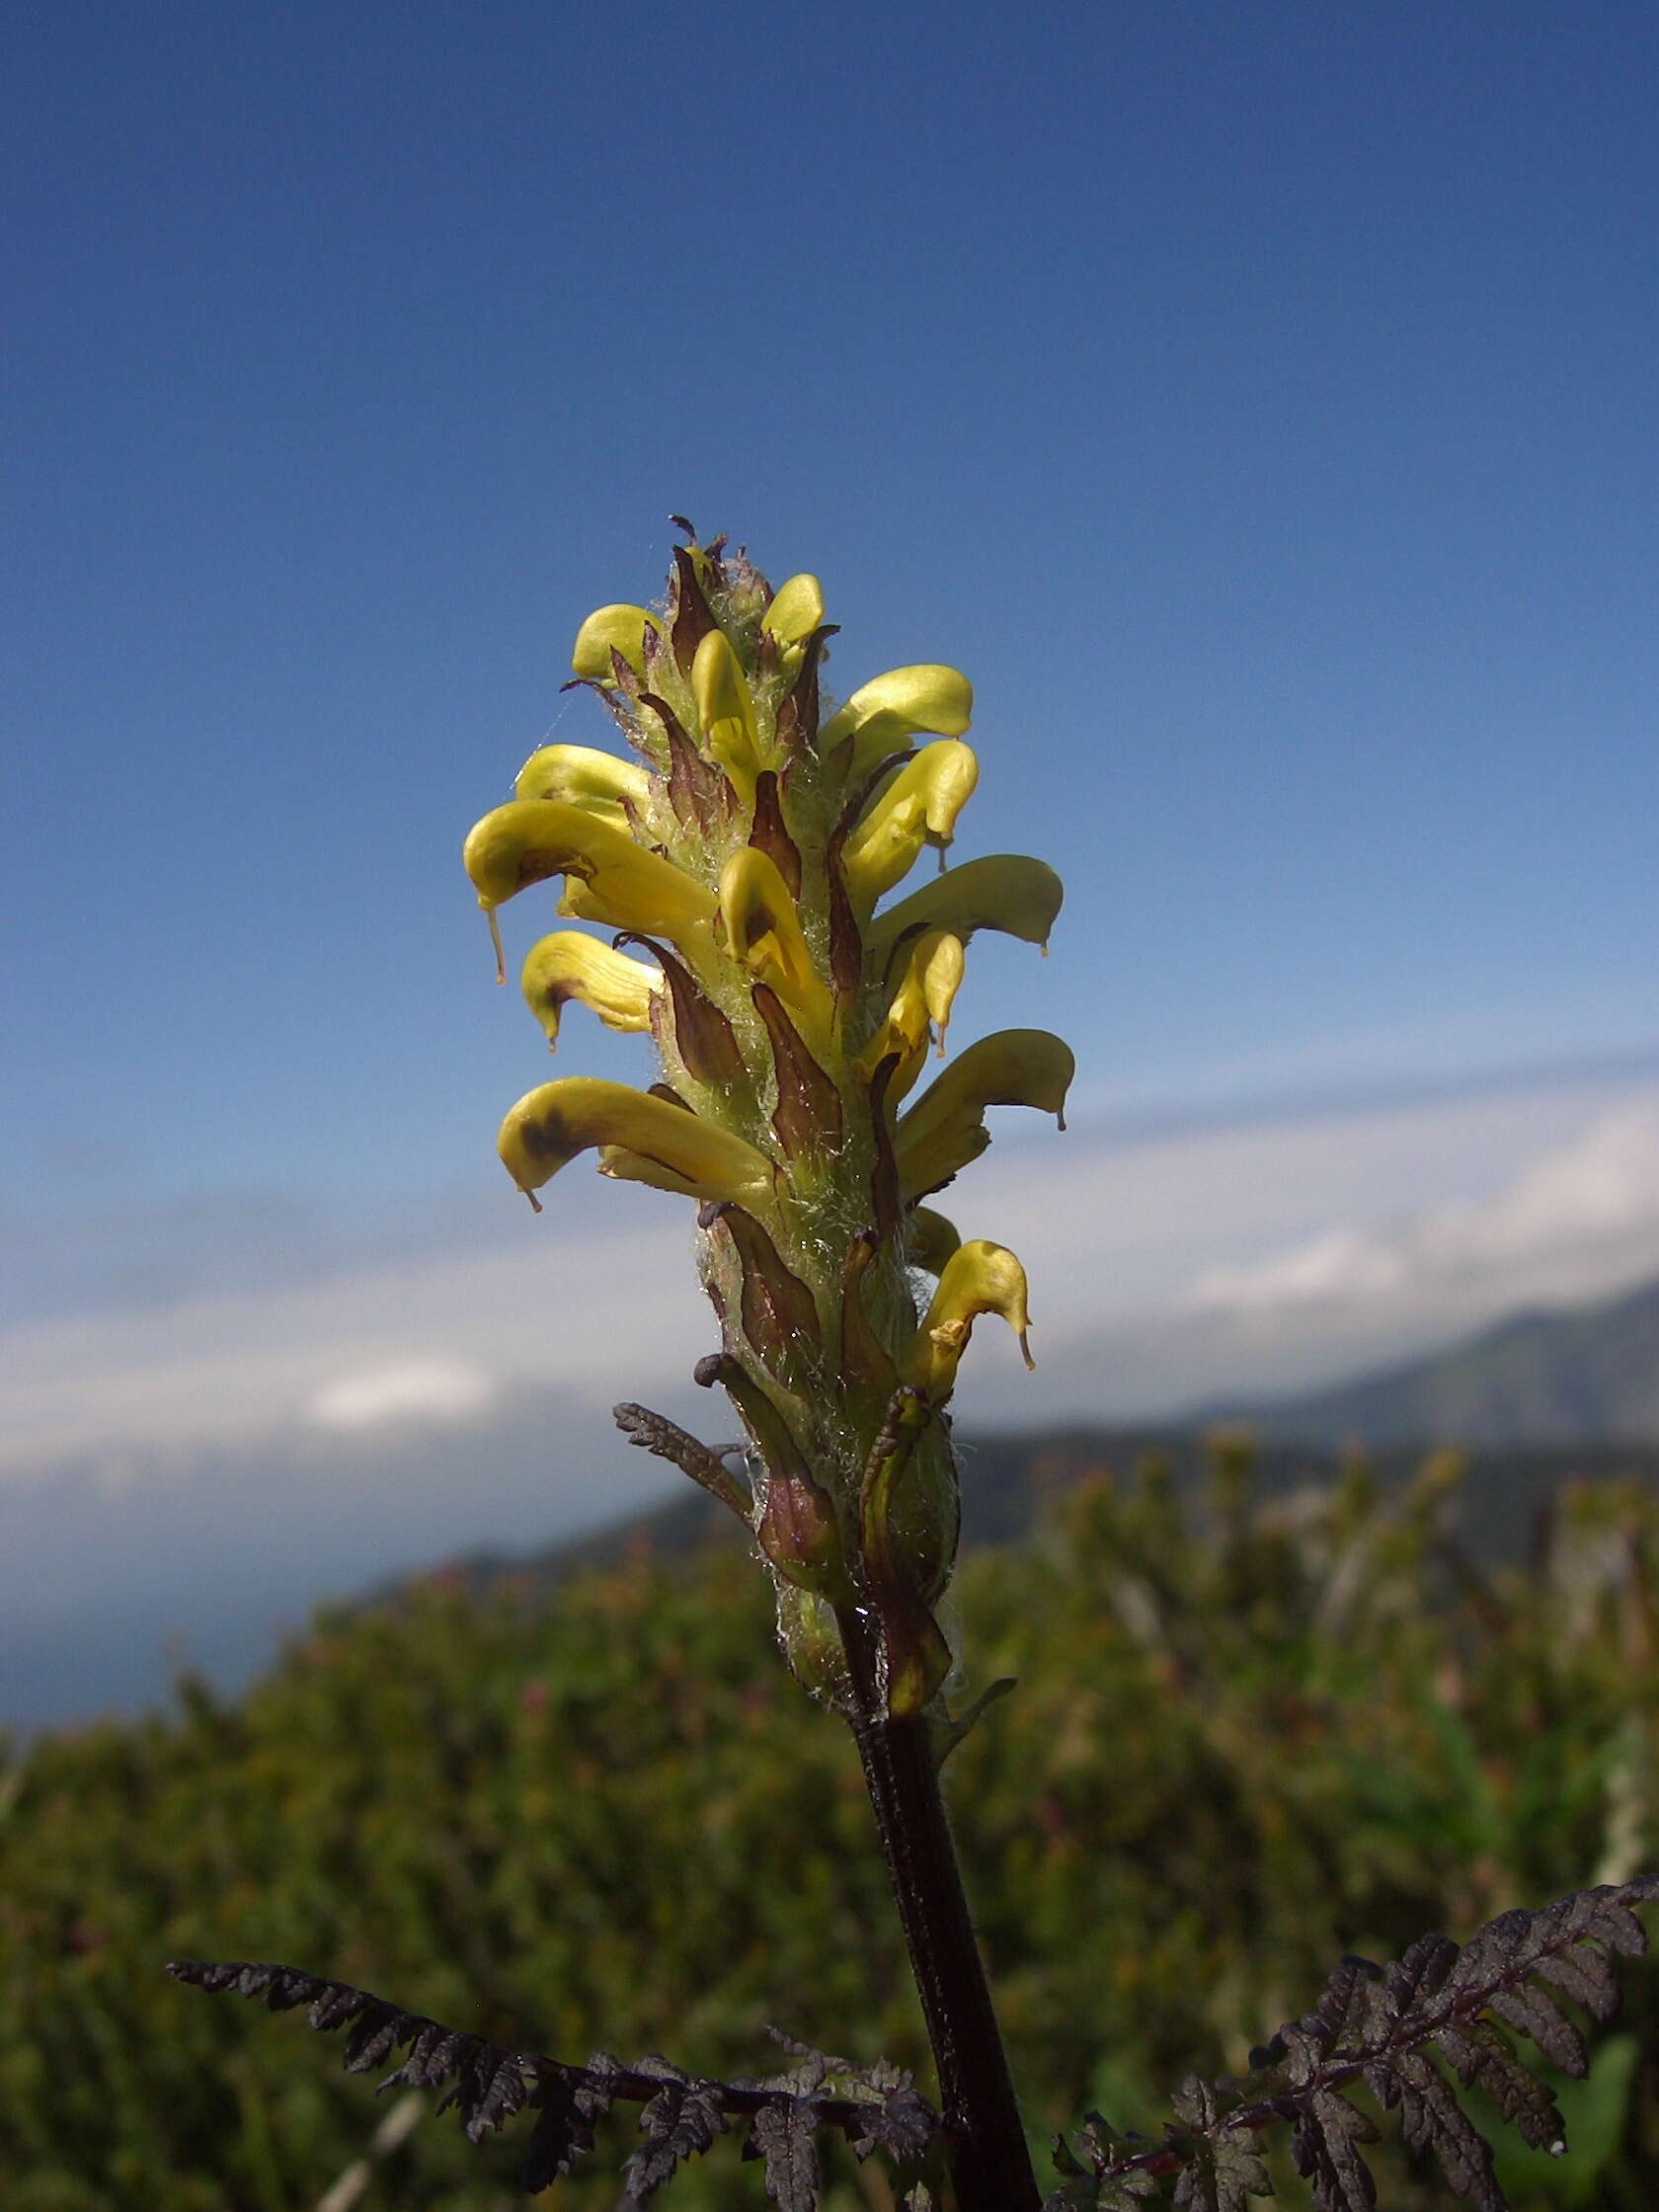 Image of Mt. Rainier lousewort